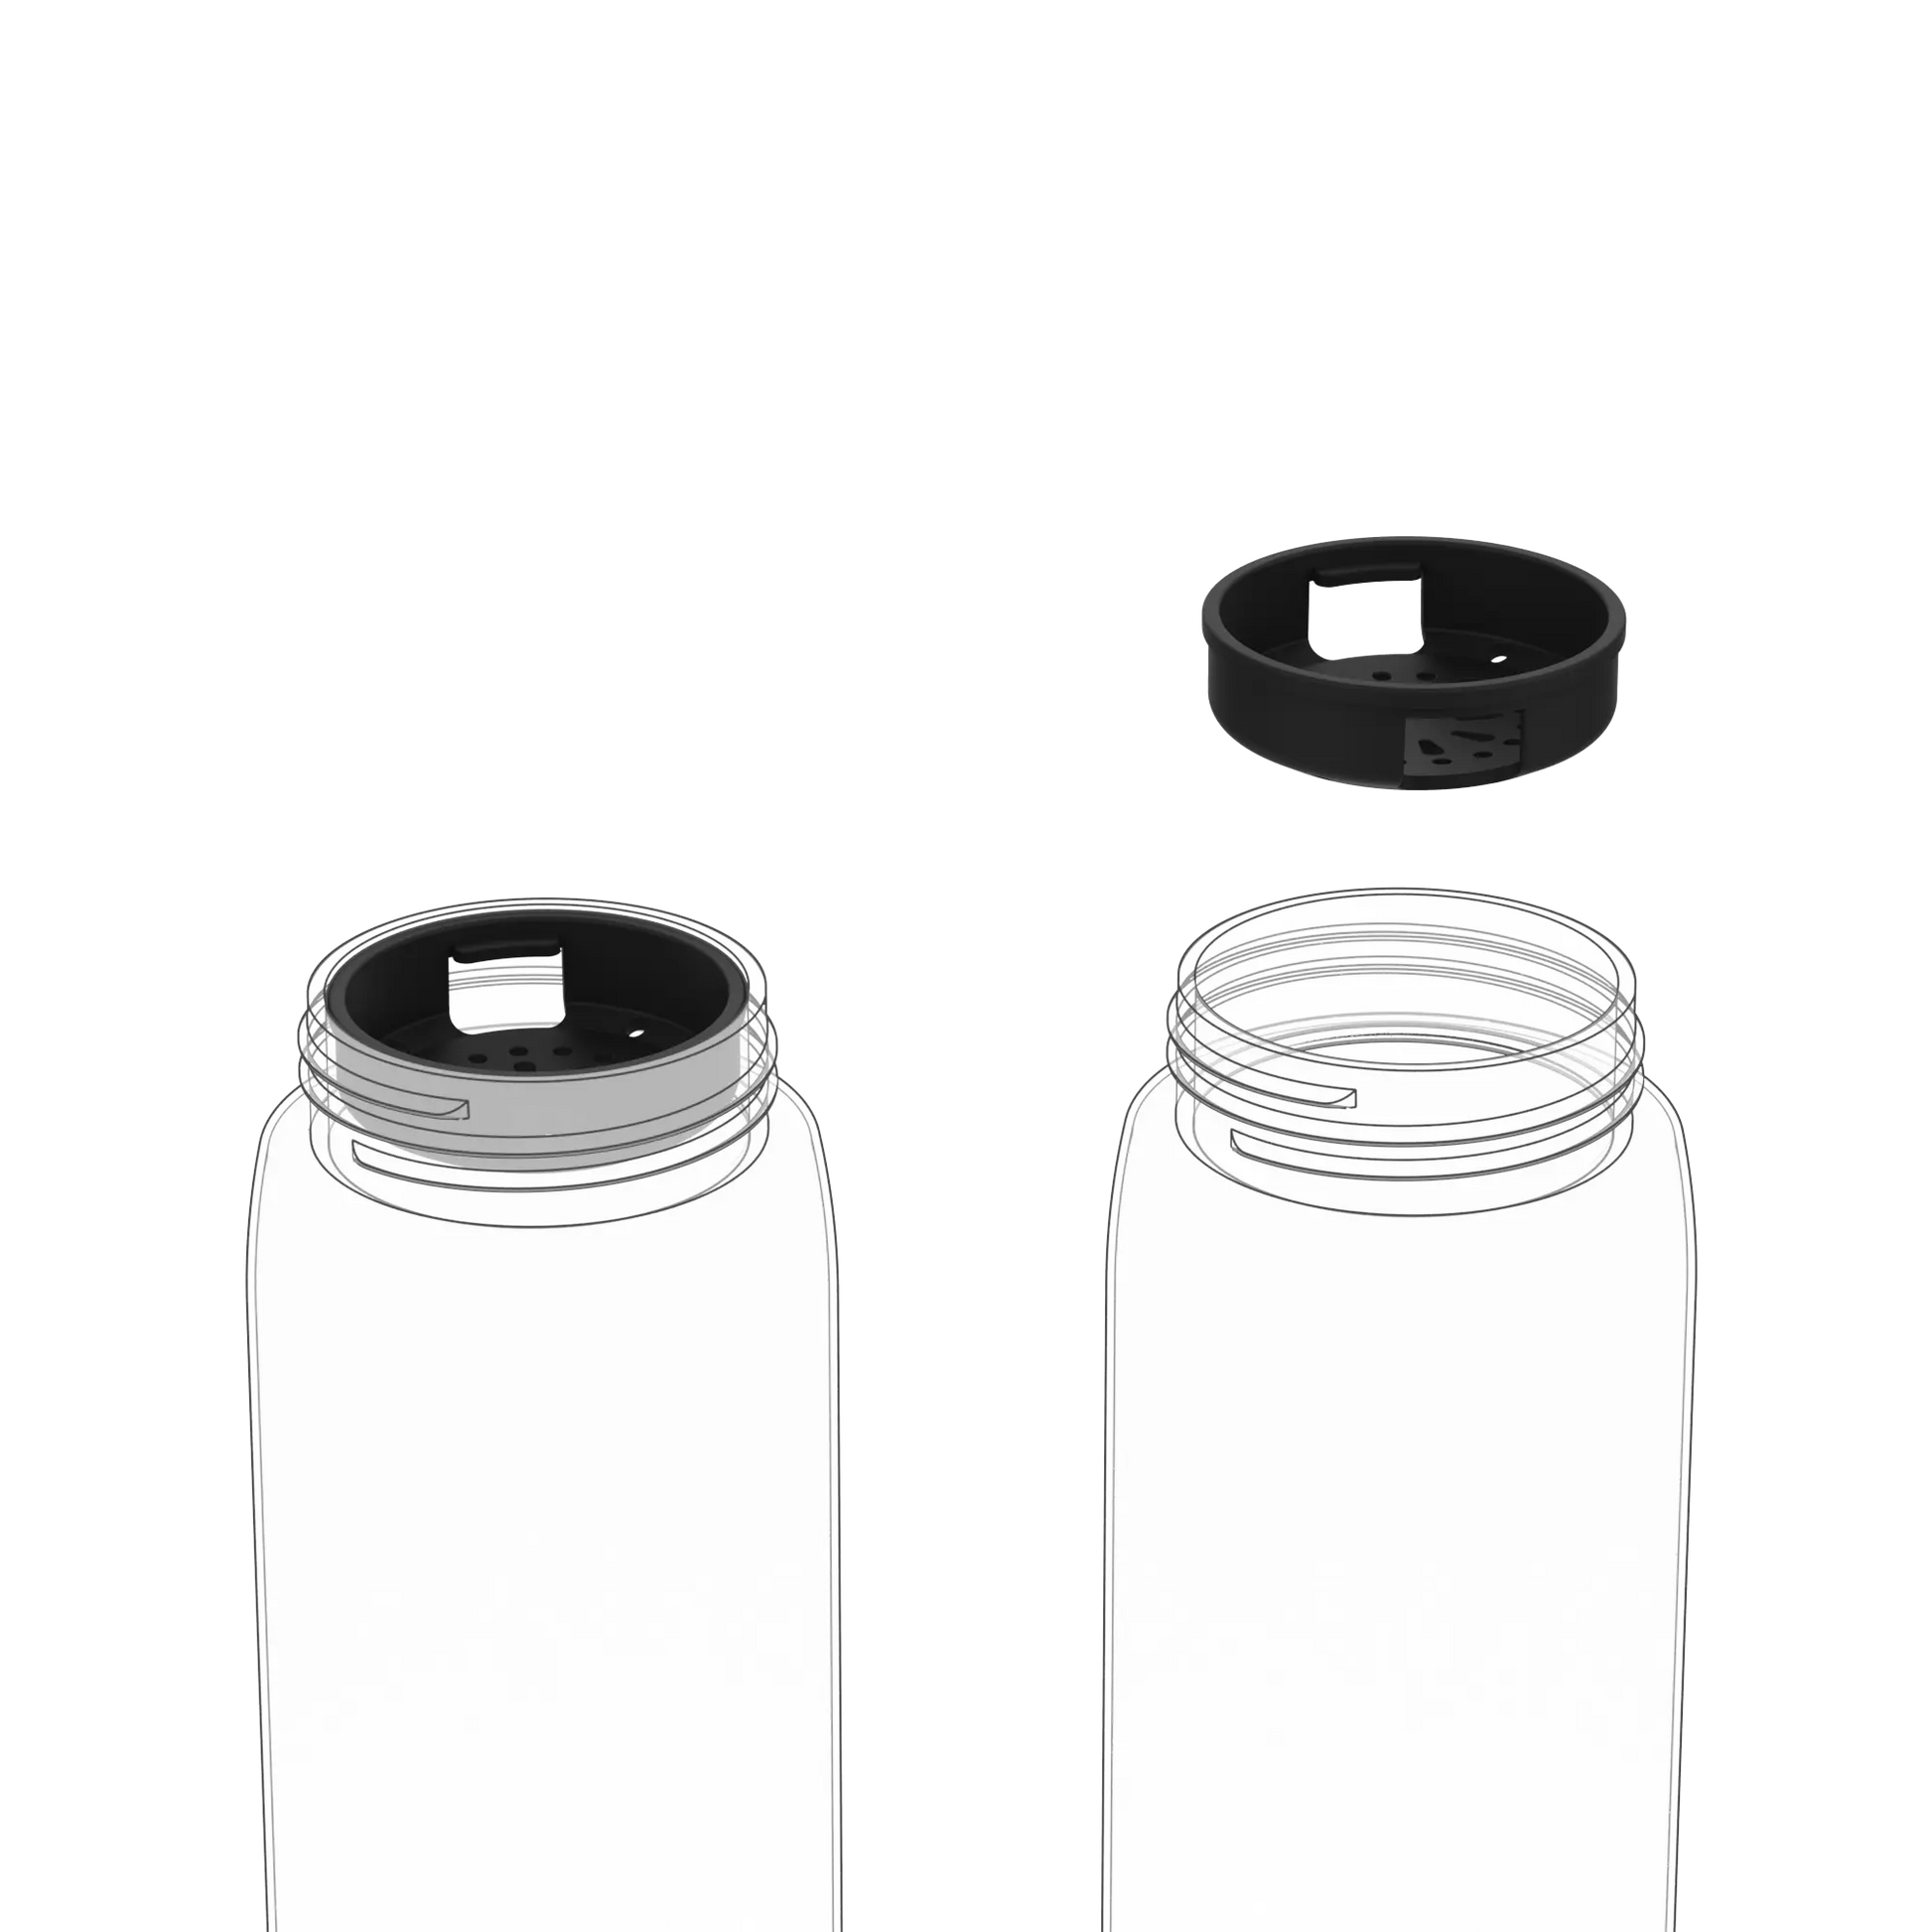 Leak Proof Water Bottle Accessory, Fruit Infuser Disc, Black, Small - ION8